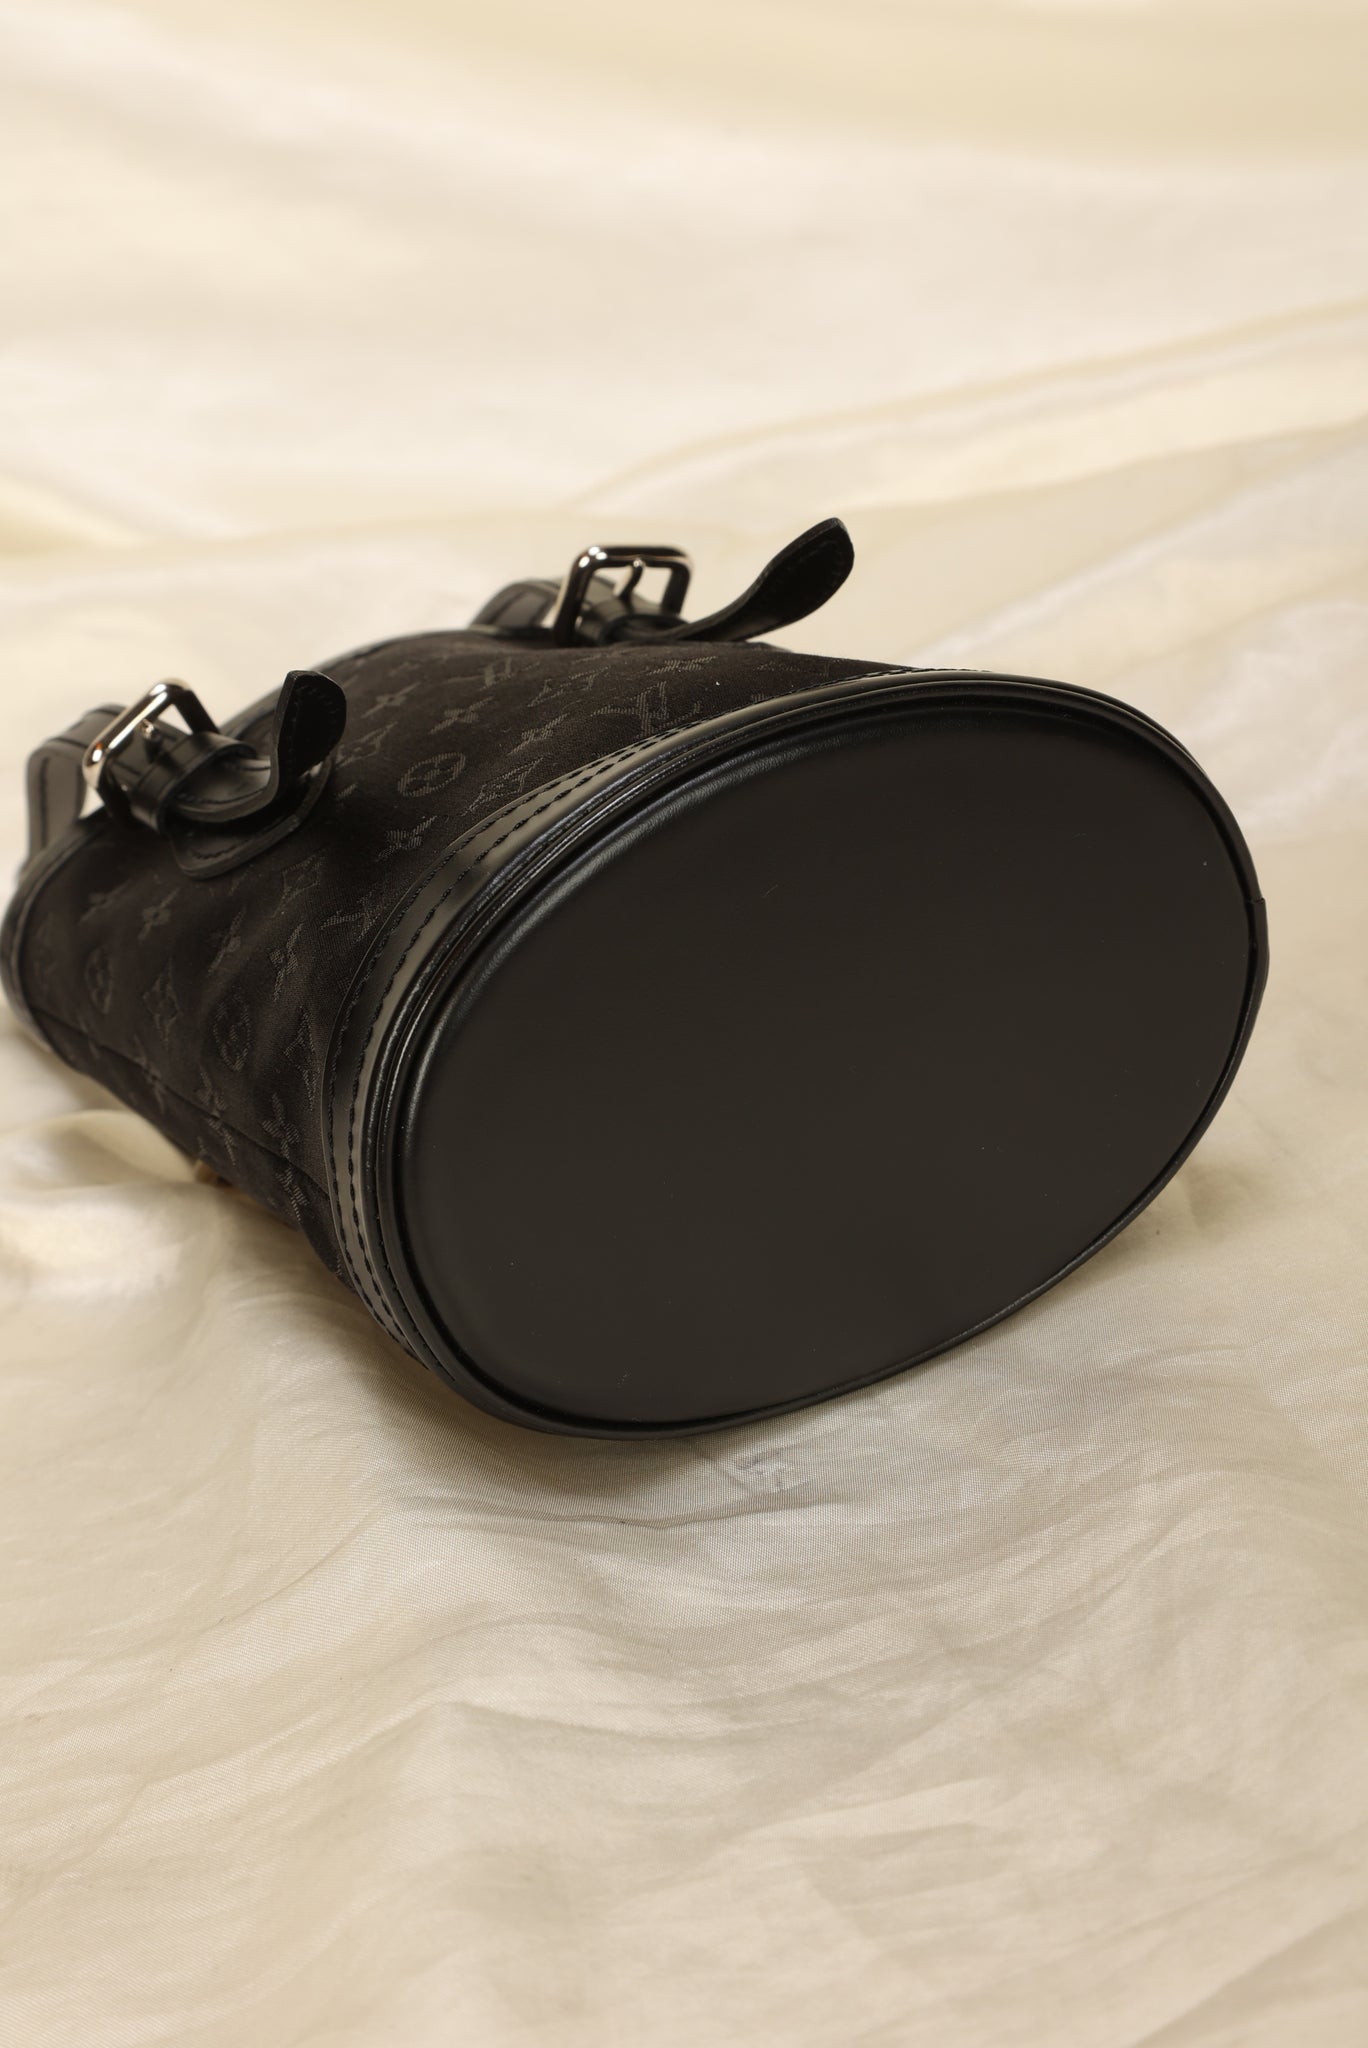 Limited Edition Louis Vuitton Satin Mini Bucket Bag